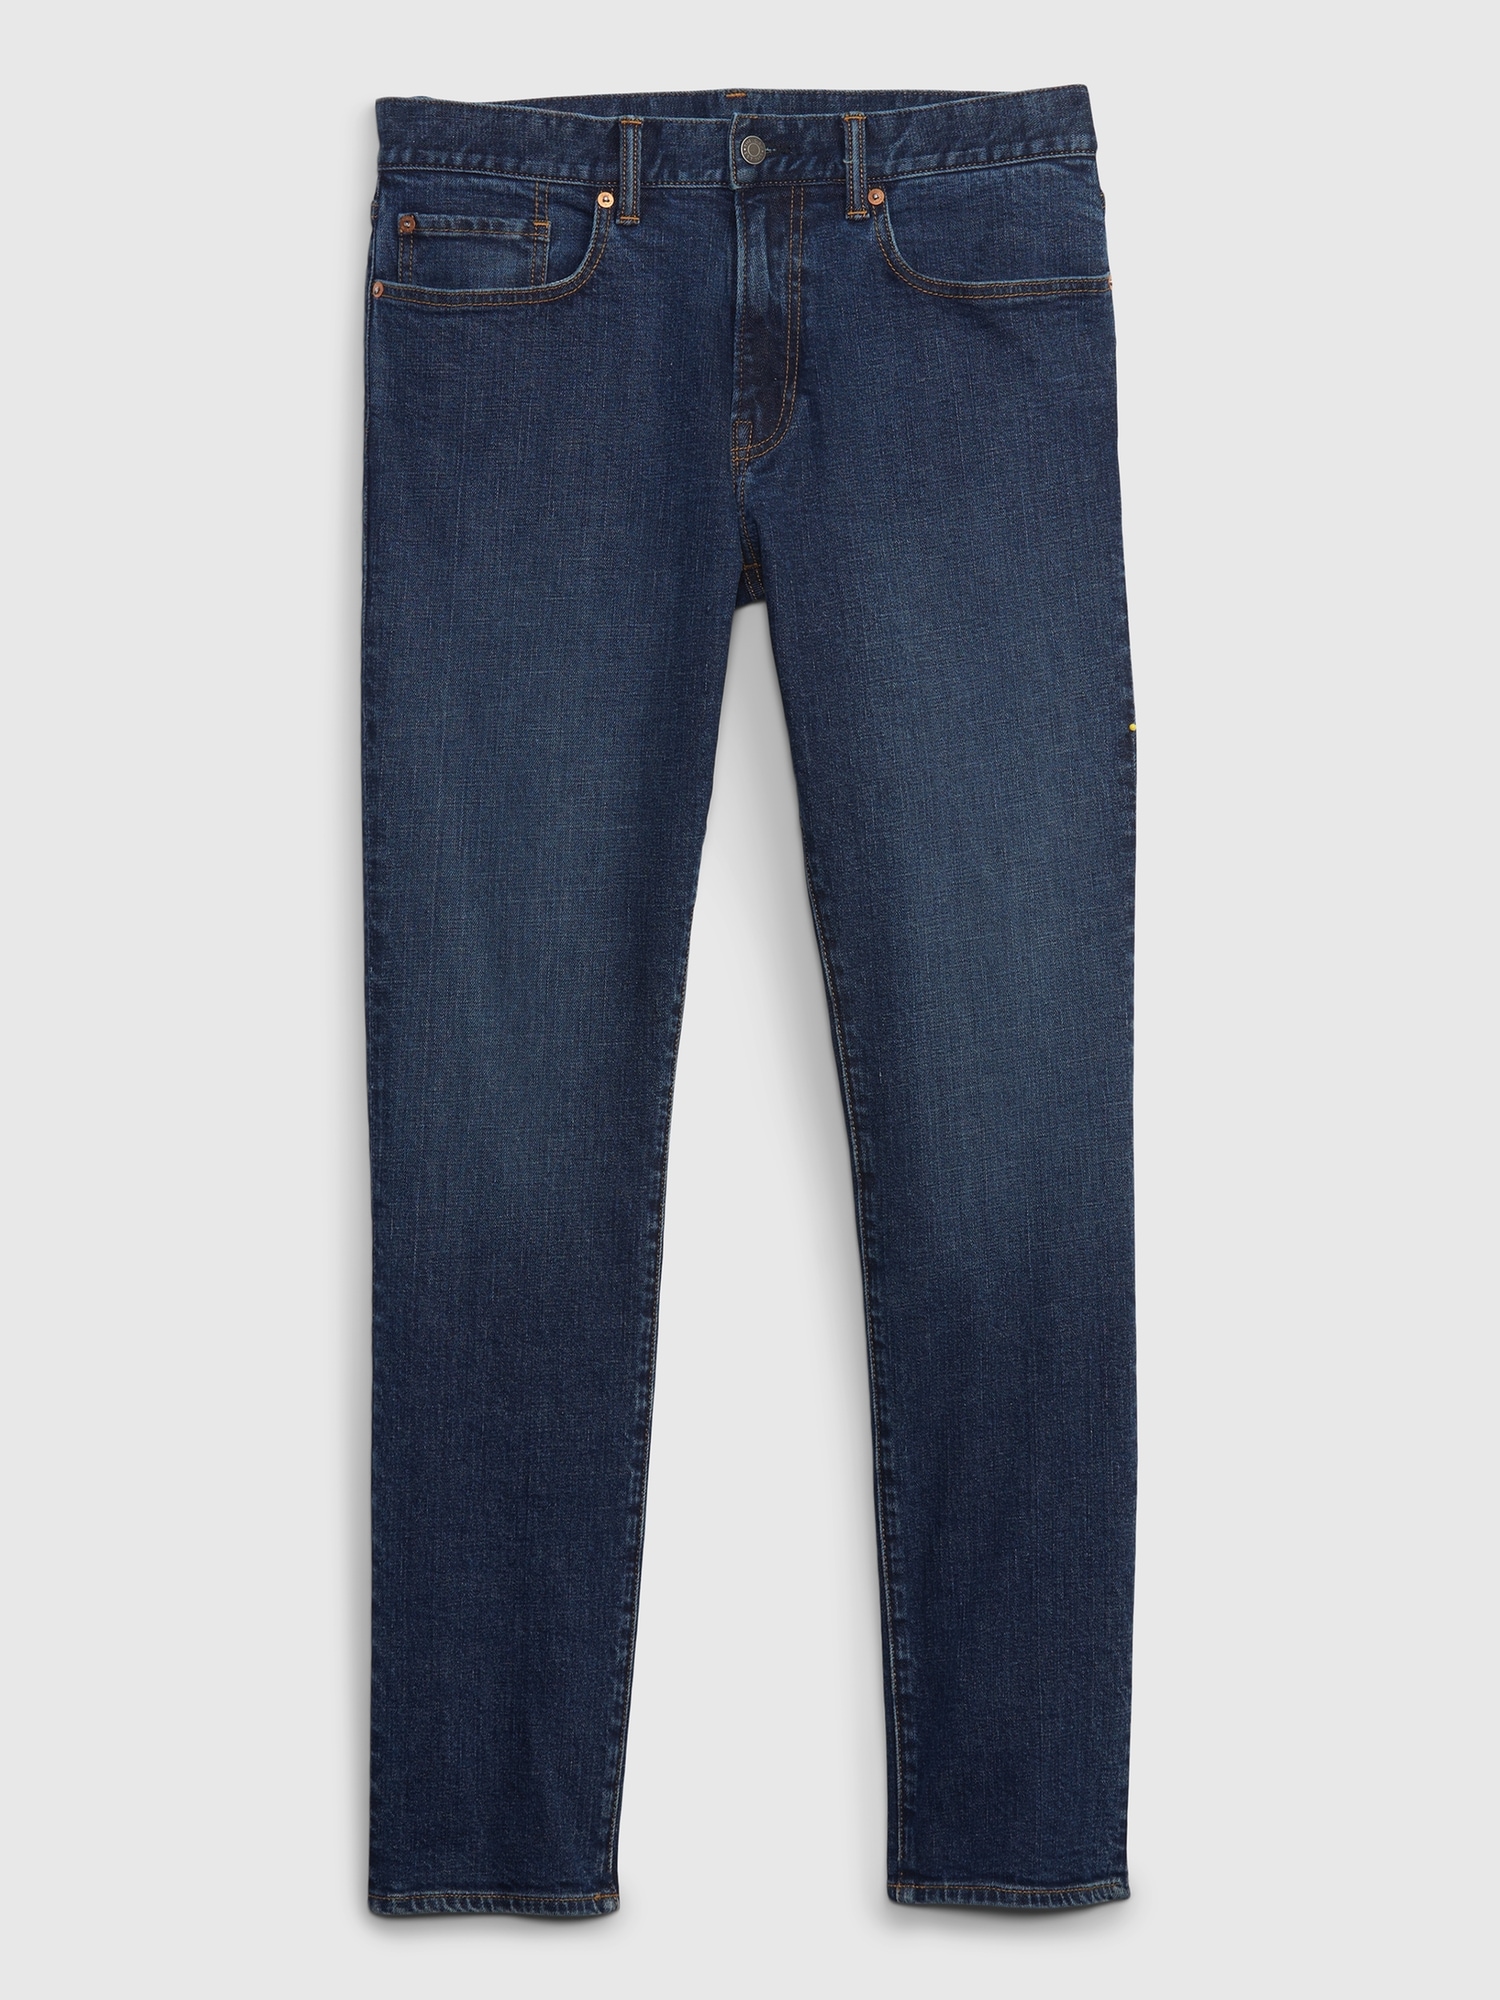 Everyday Slim Jeans in GapFlex with Washwell | Gap